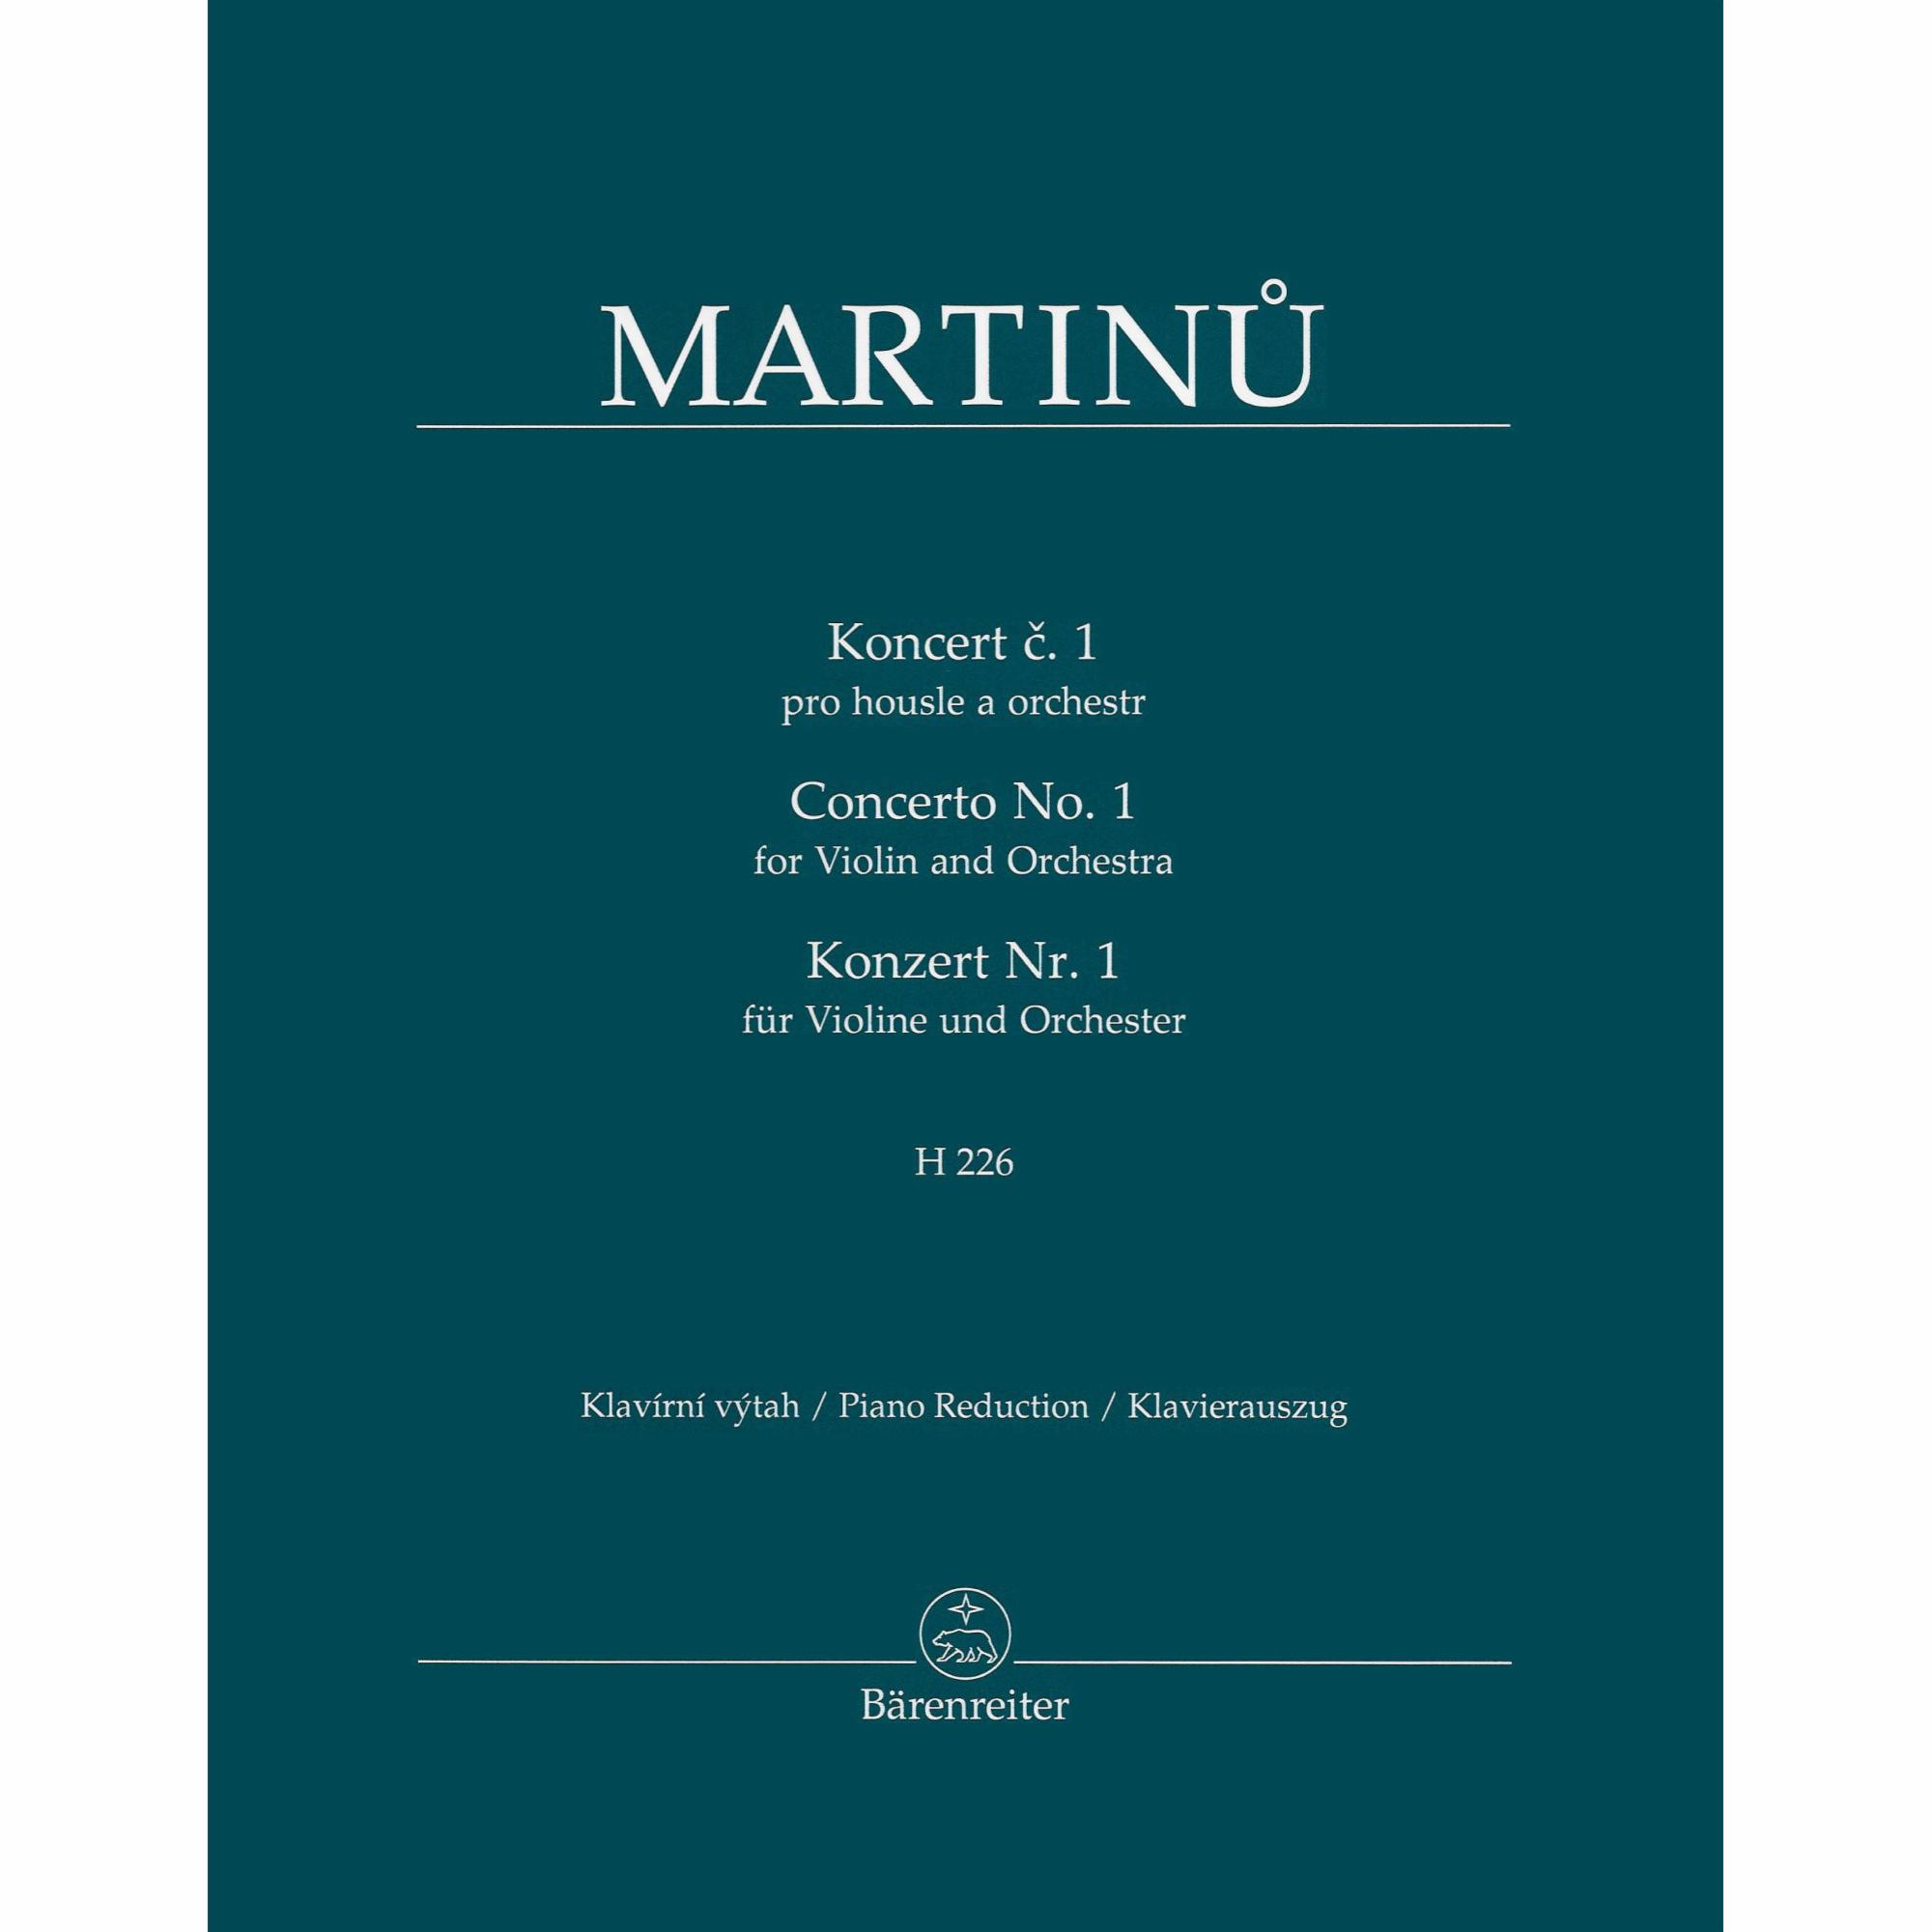 Martinu -- Concerto No. 1, H. 226 for Violin and Piano